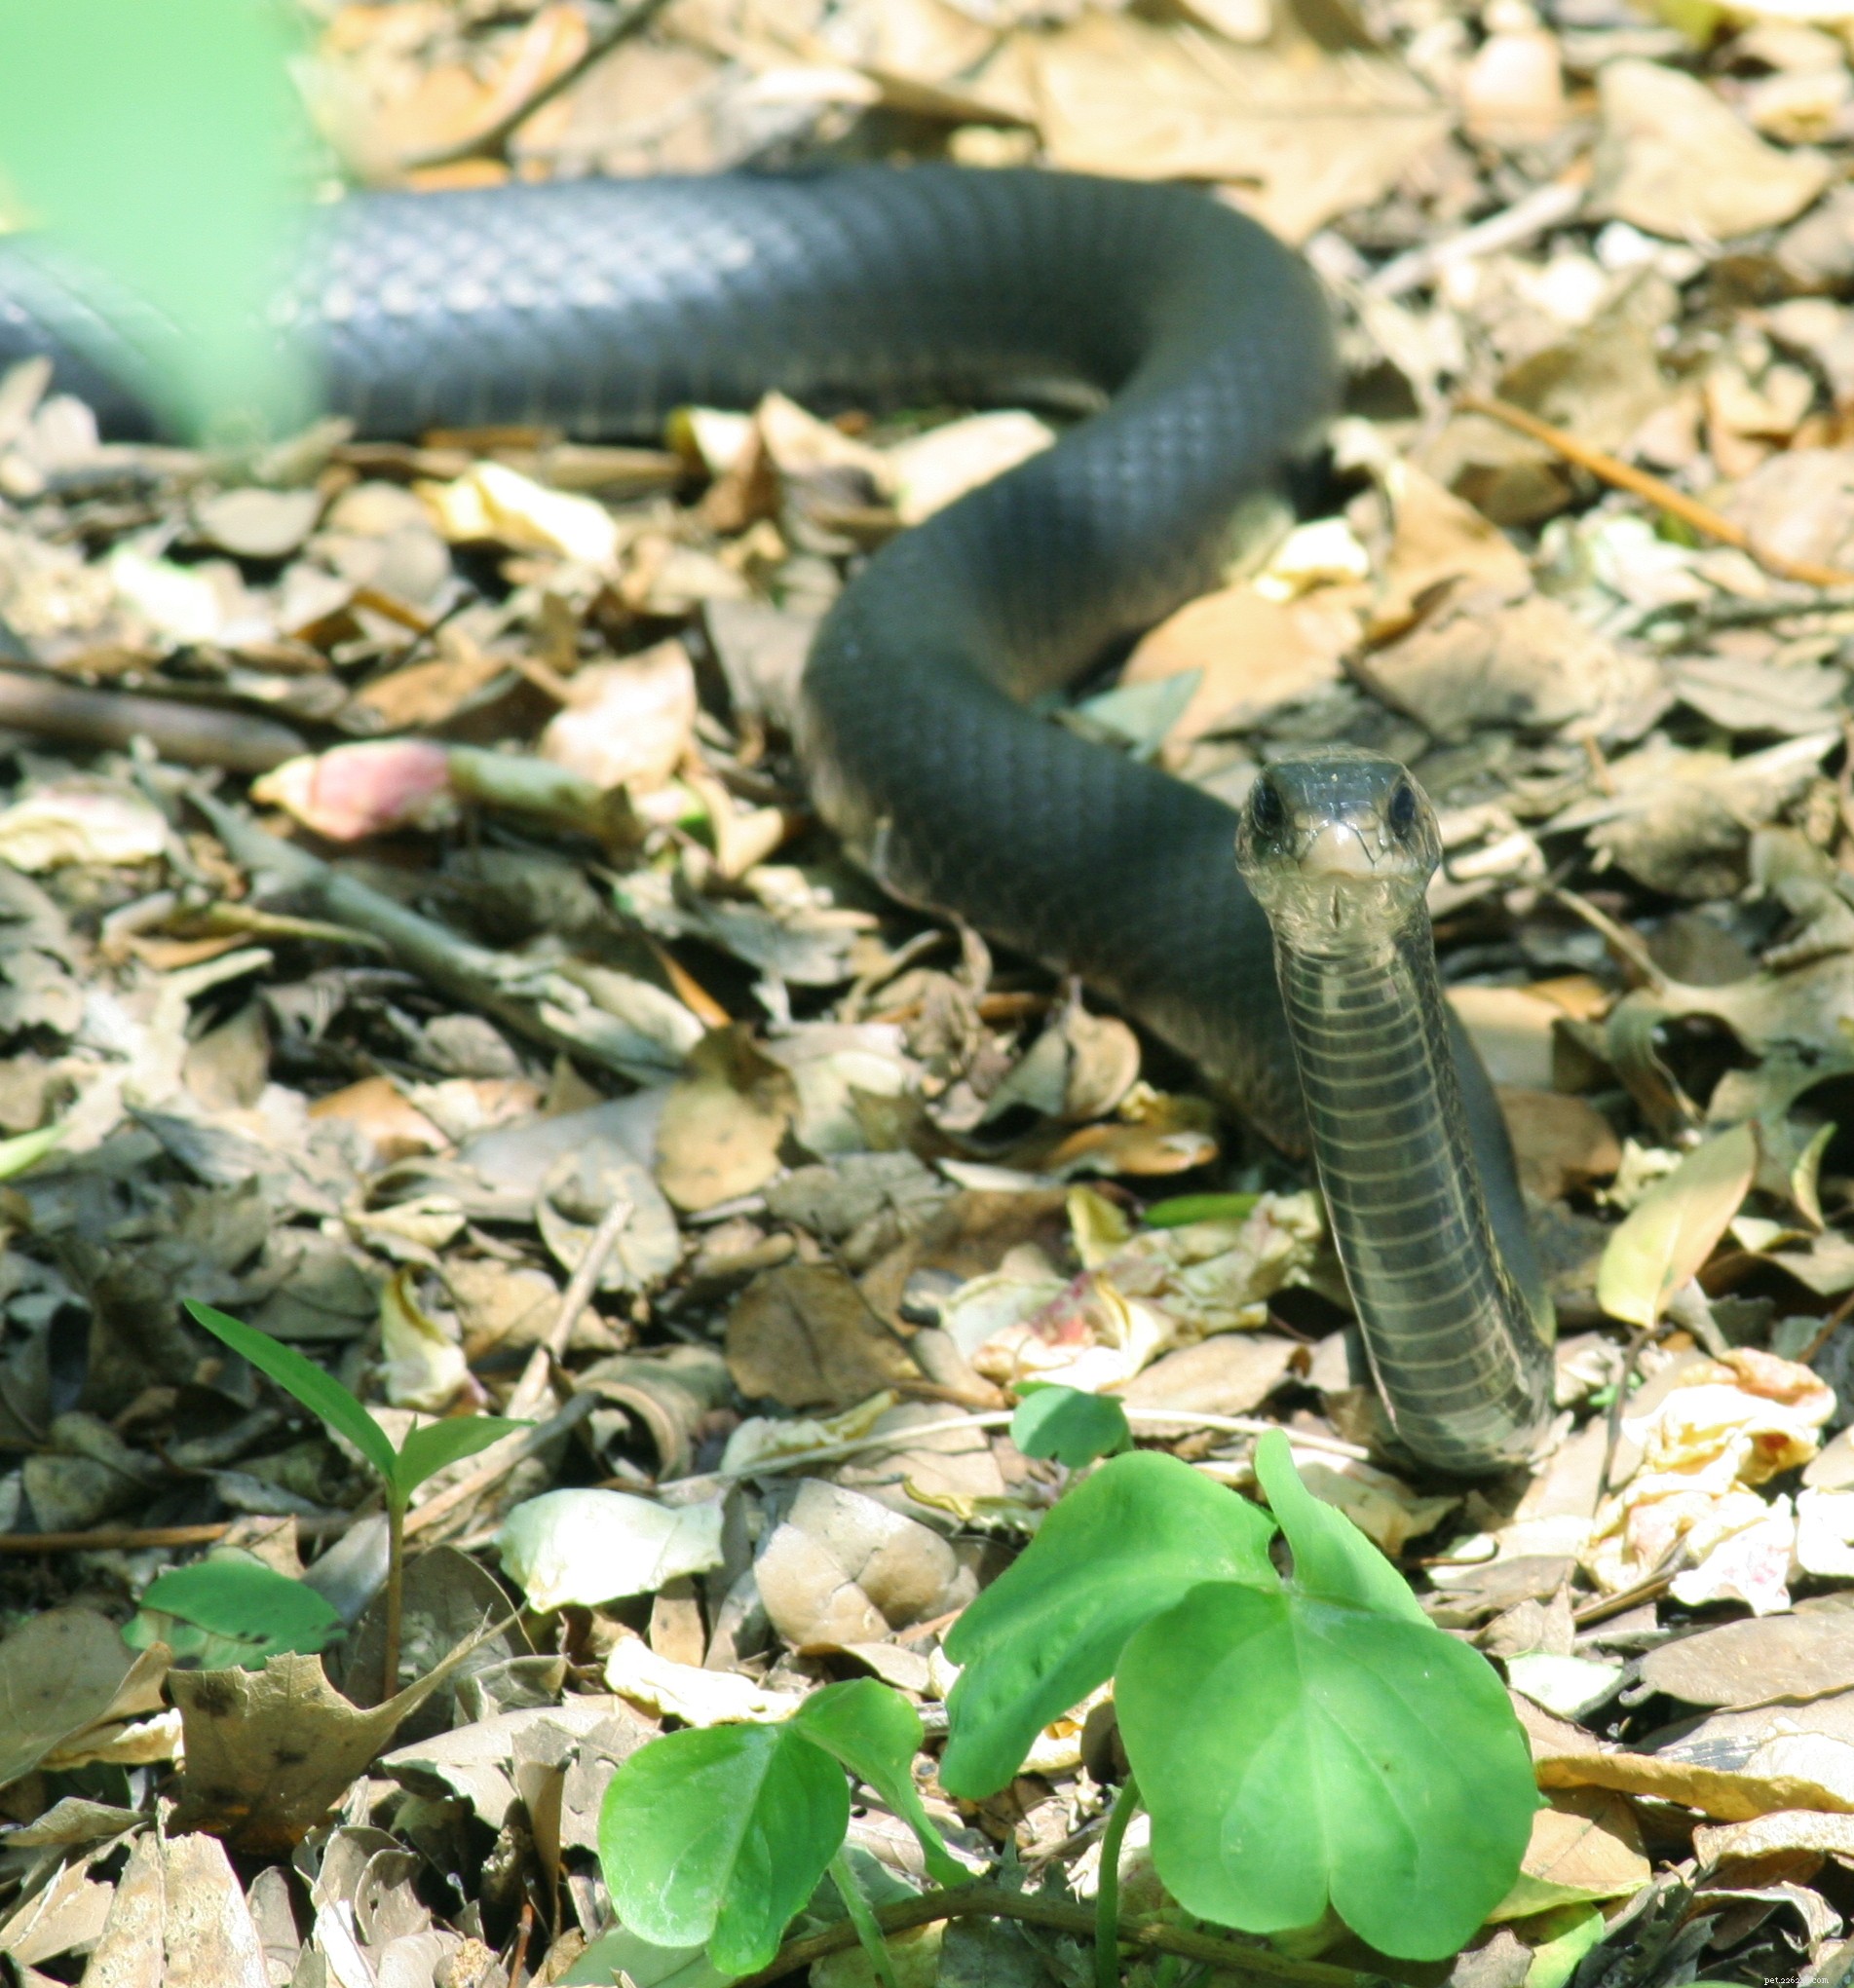 Snake Hunting met Romulus Whitaker – Leren van de Meester